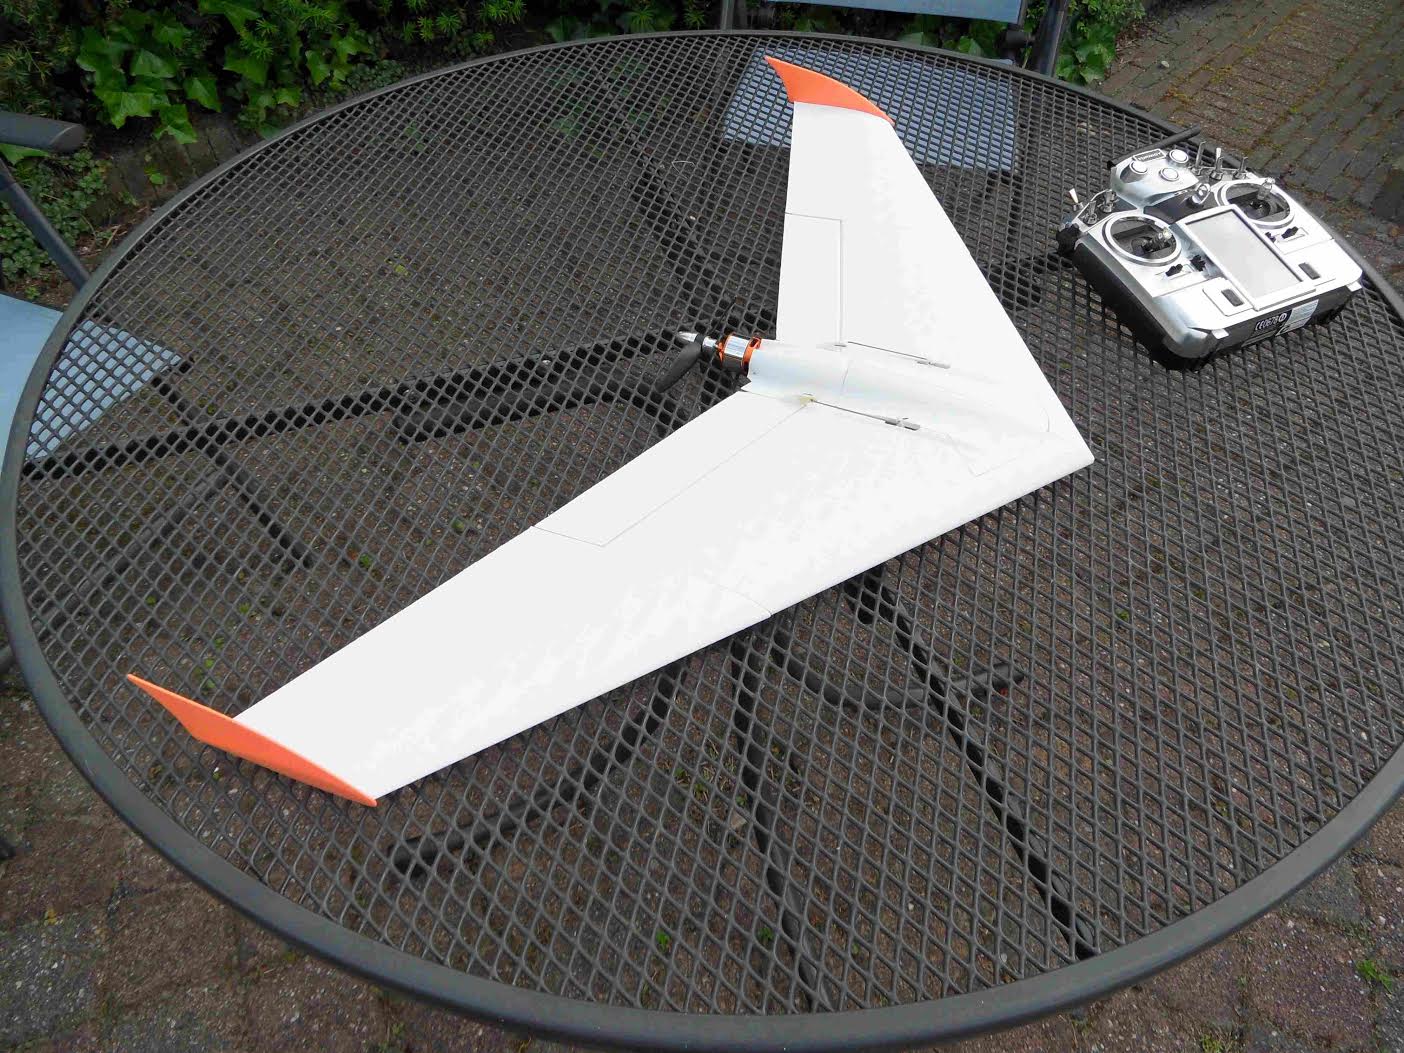 This Amazing 3D Printed Winged UAV Suffers Devastating Crash 3DPrint